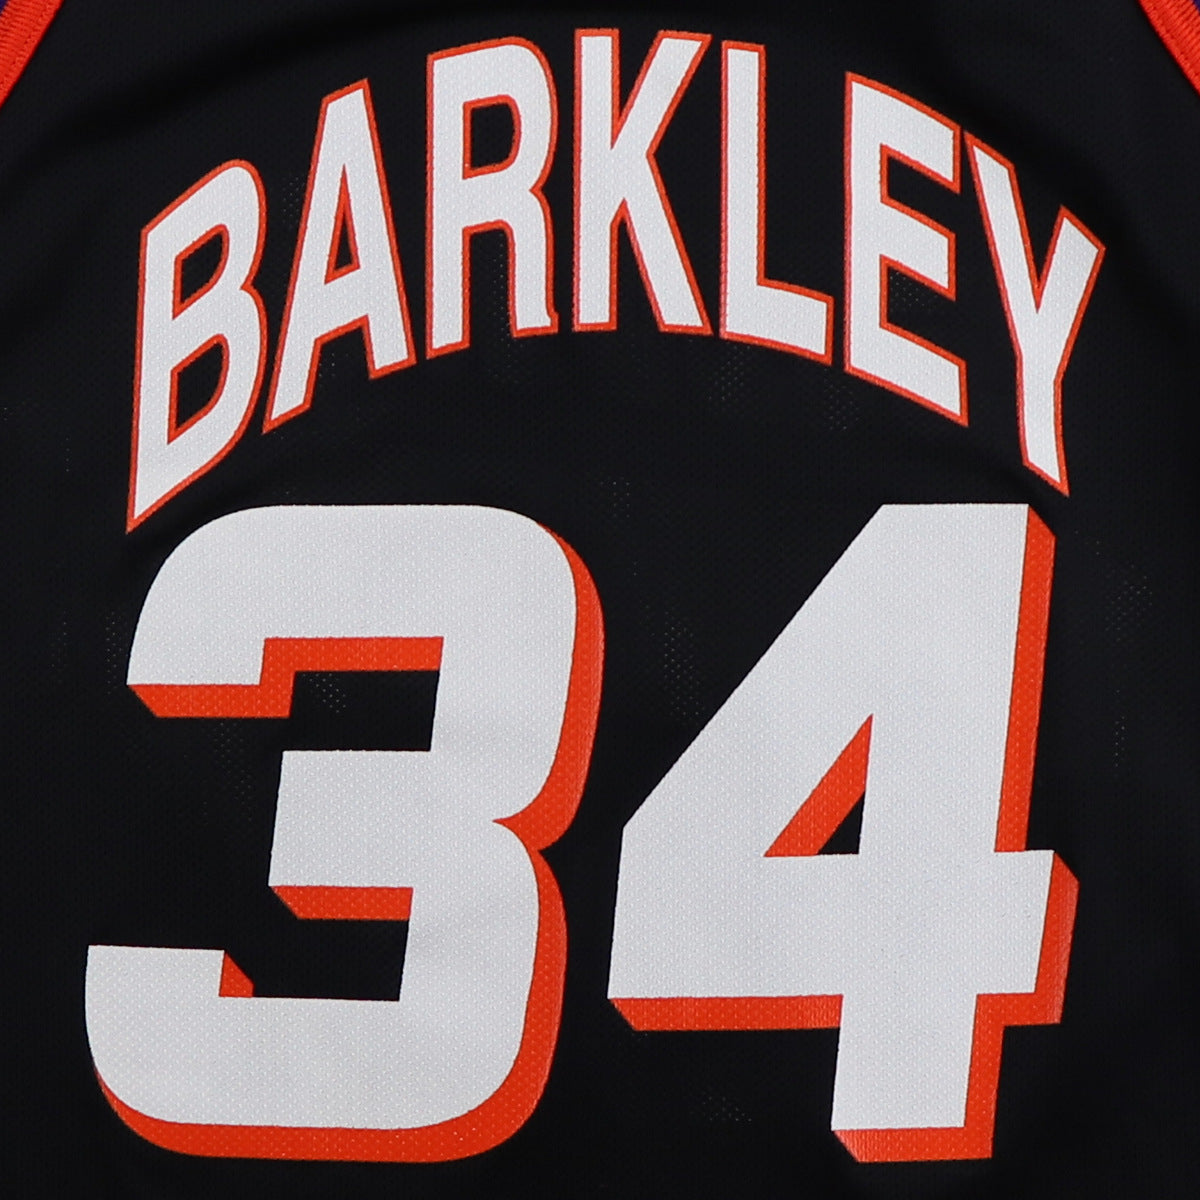 Charles Barkley Throwback Jerseys, Vintage NBA Gear